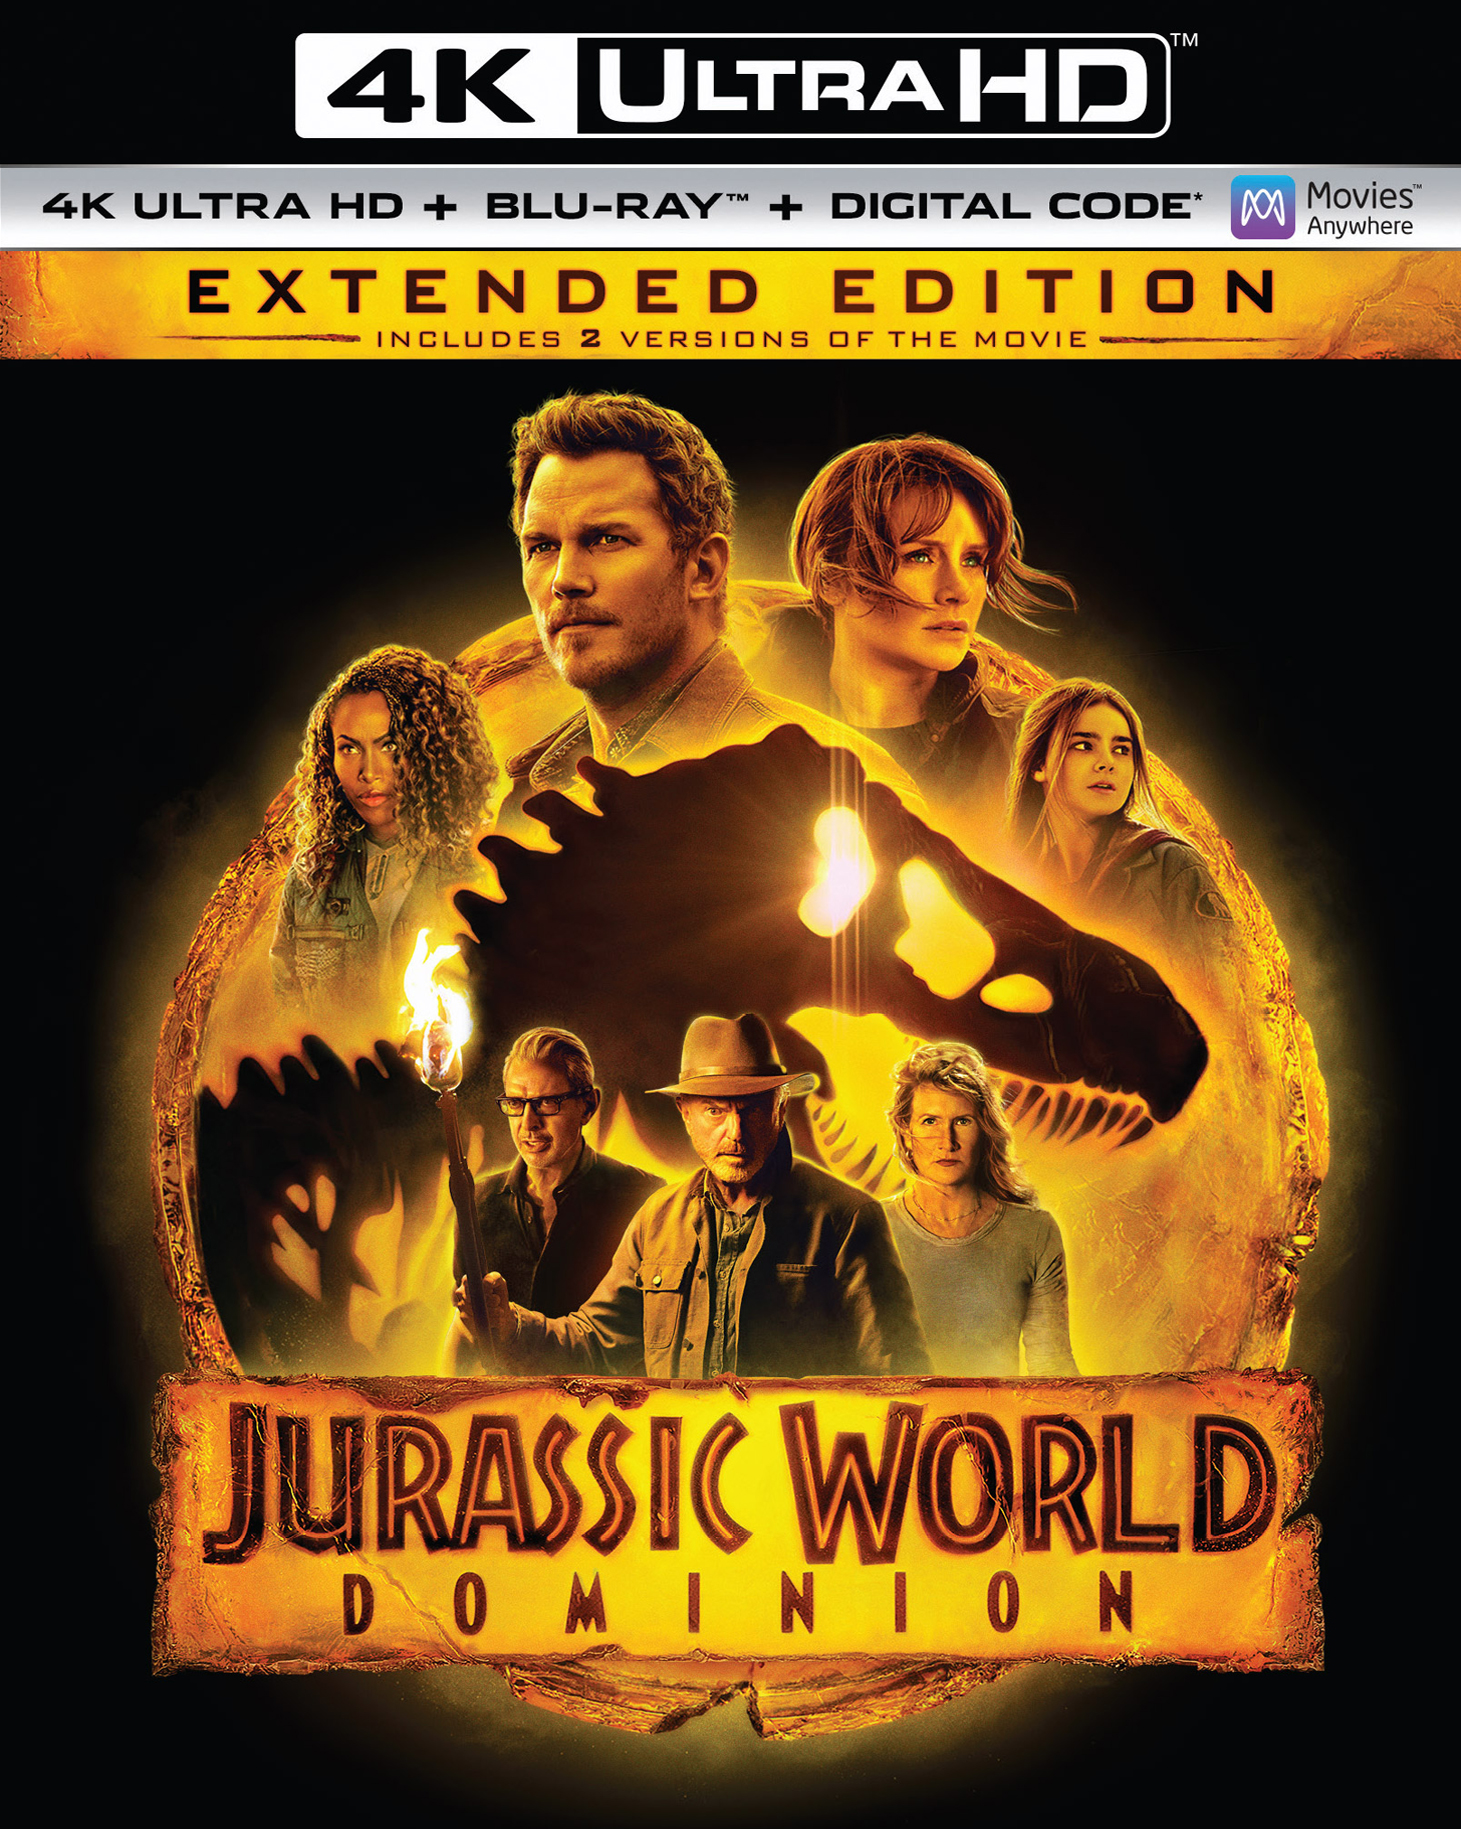  Jurassic World [DVD] [2014] : Movies & TV